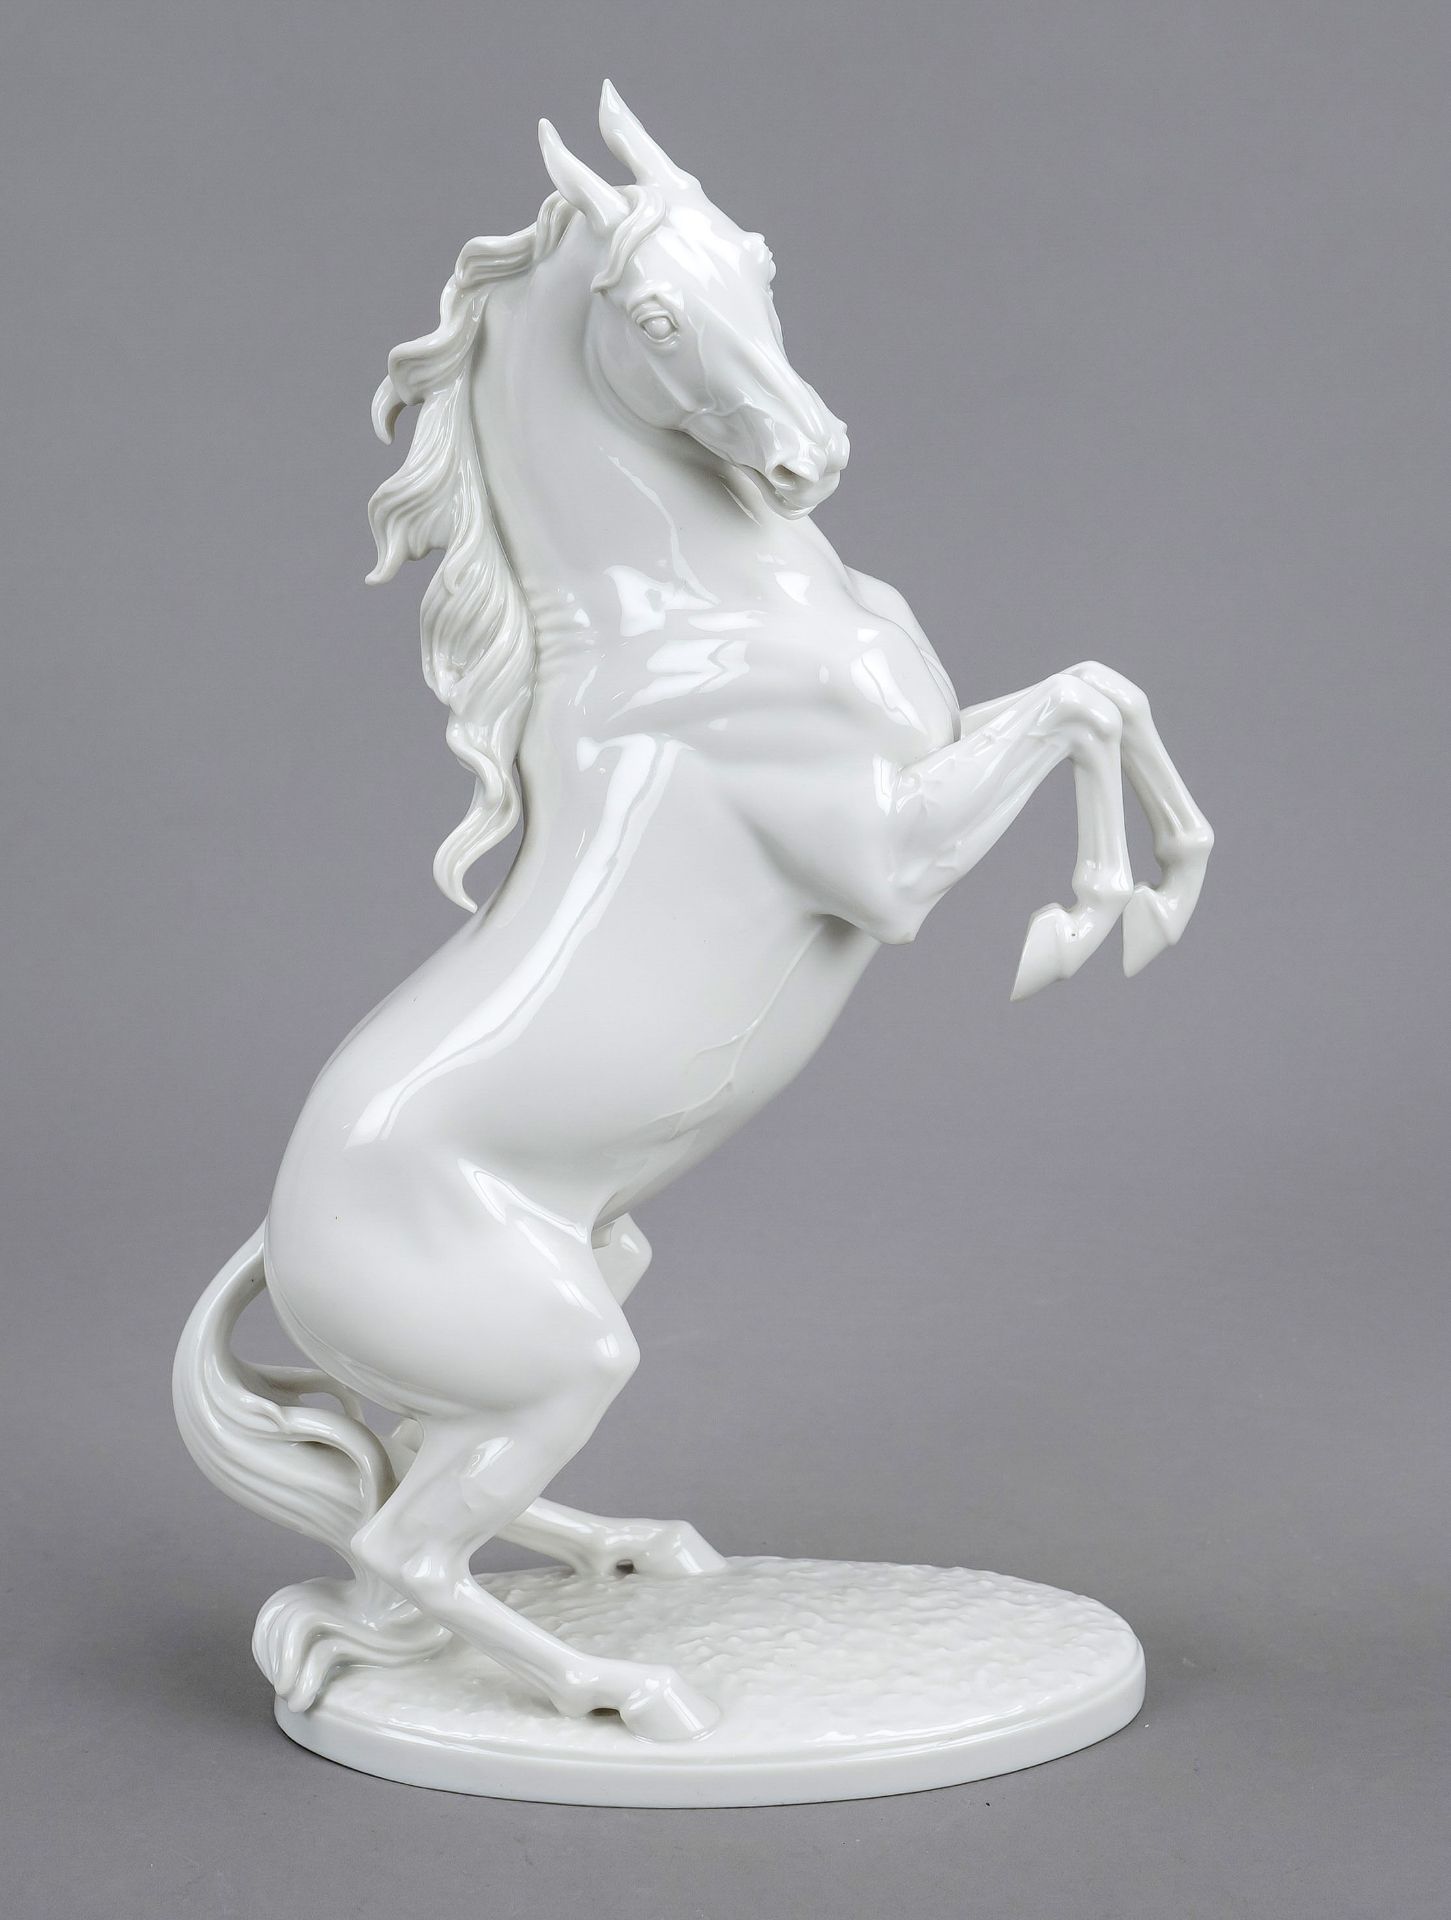 Rising horse, Allach, Bavaria, mark 1936-1945, designed by Adolf Röhring around 1938, model no.